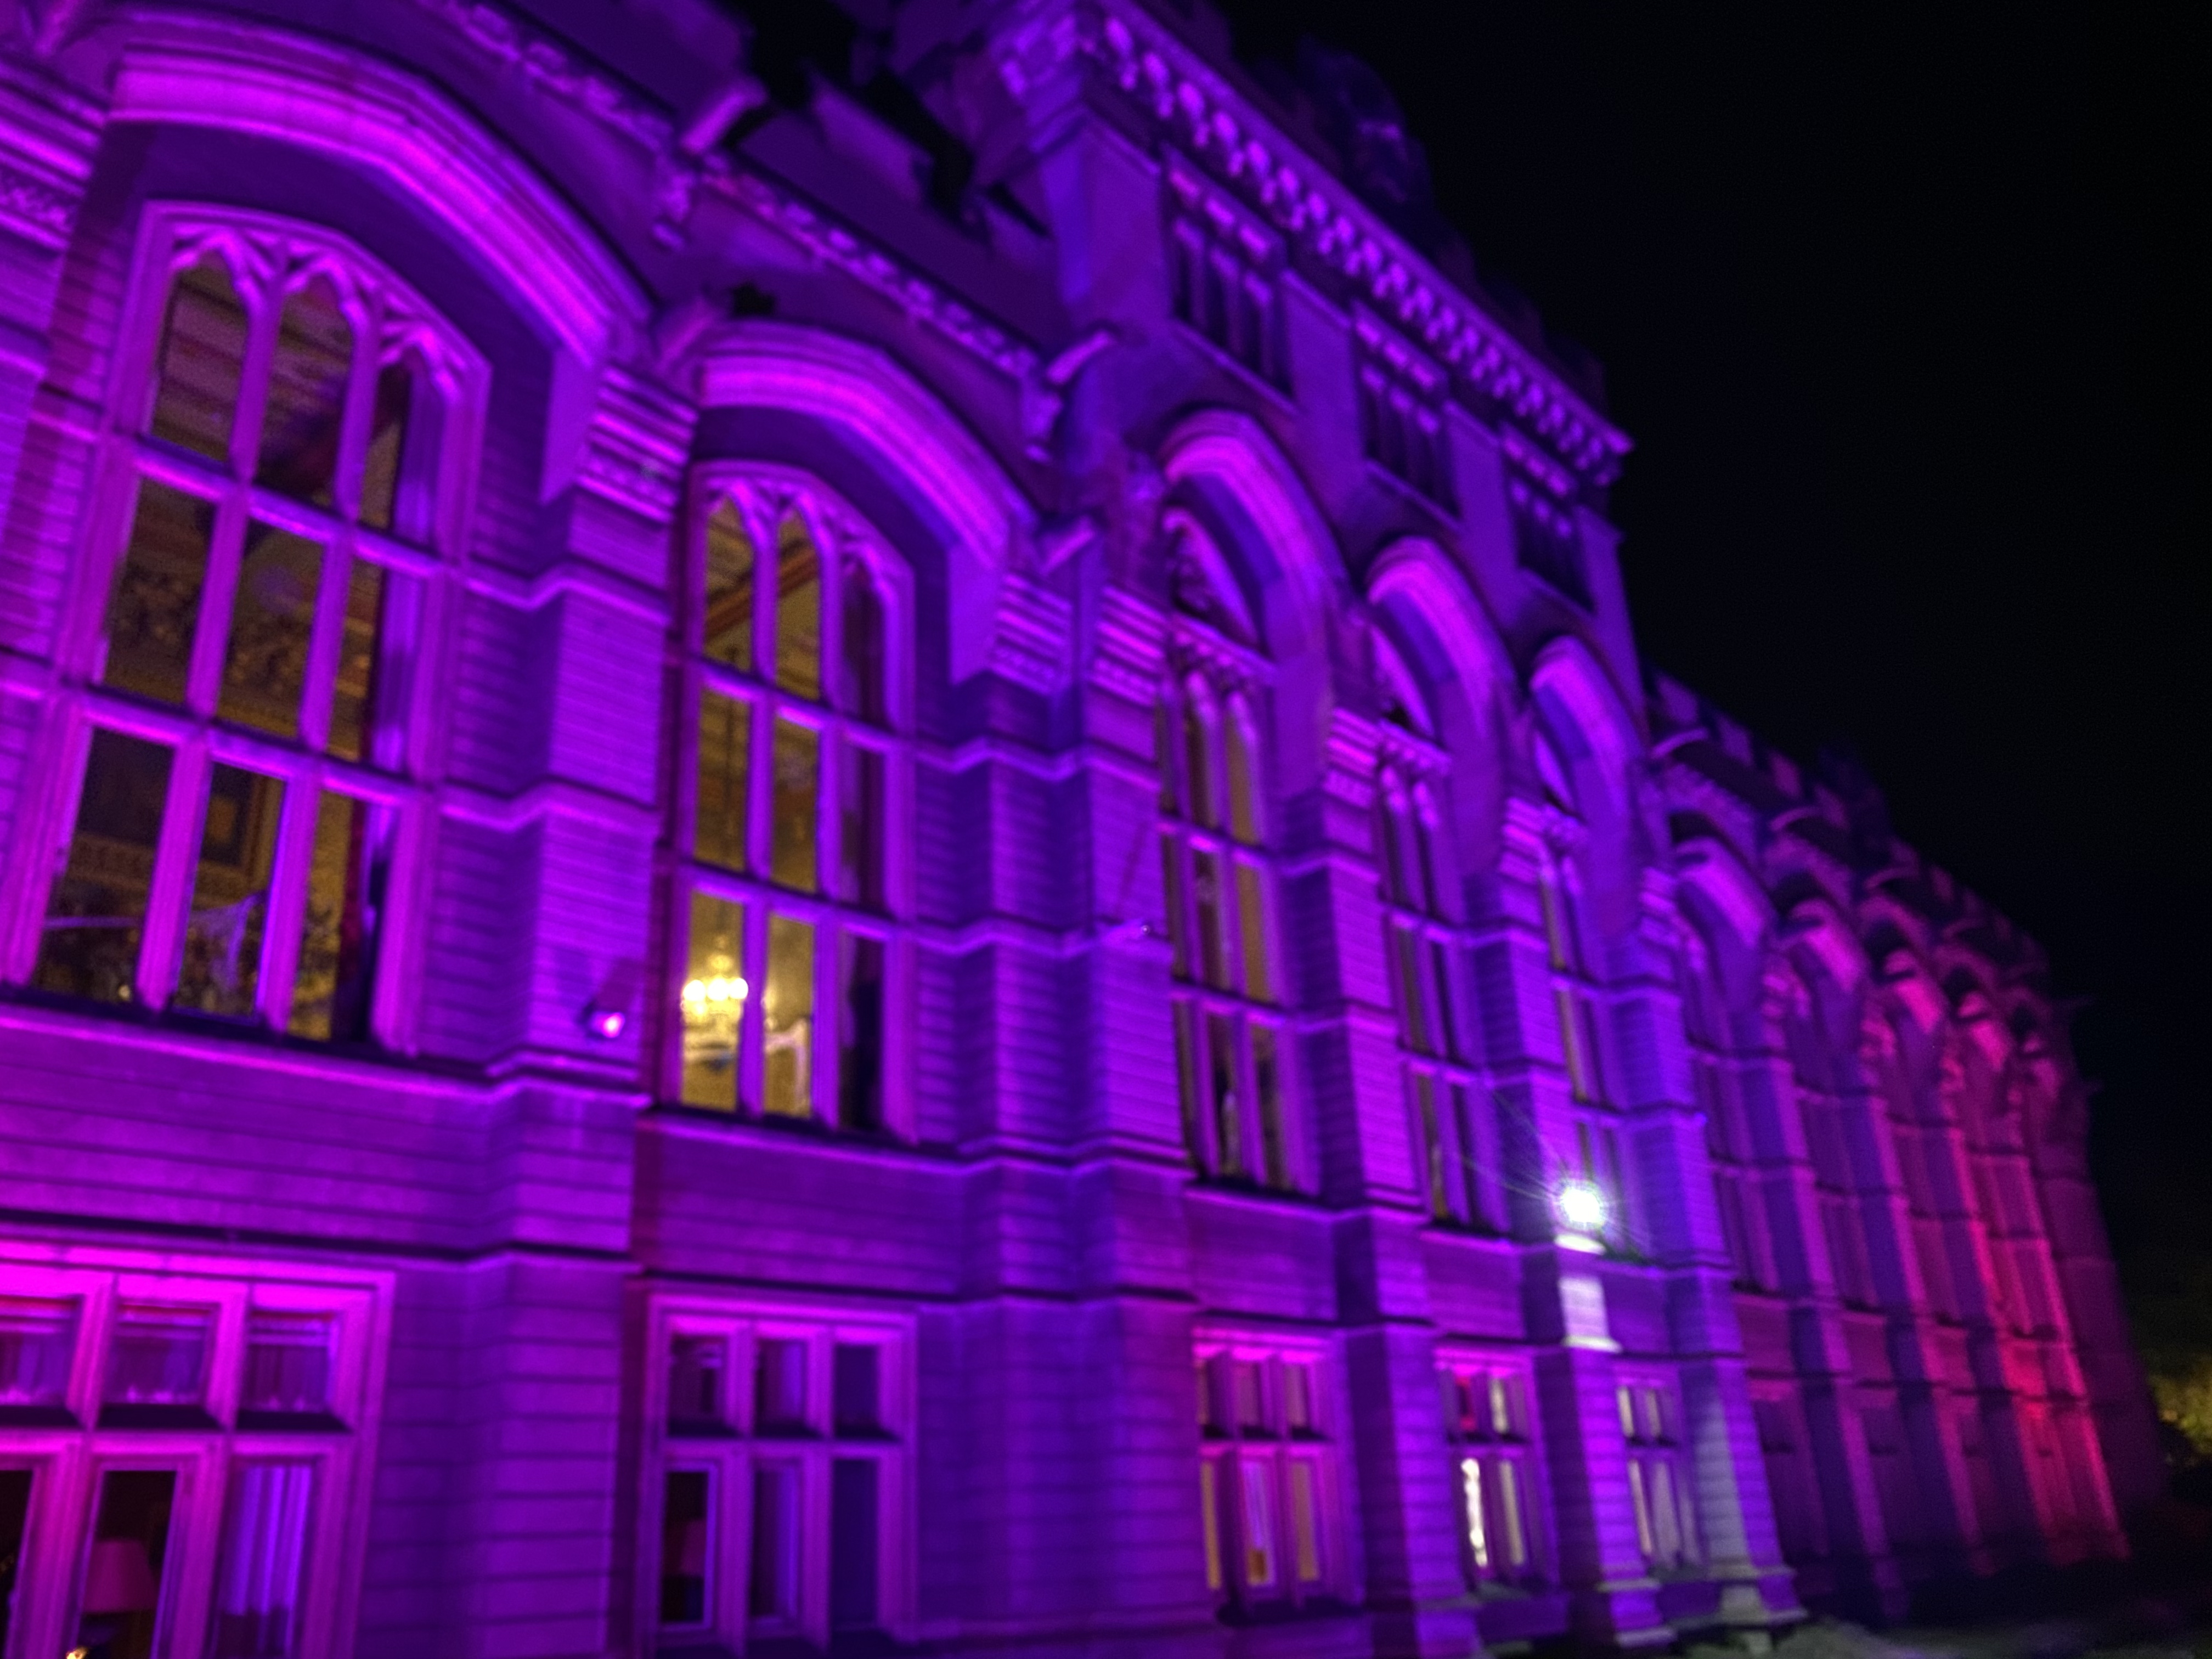 carlton towers in purple lights